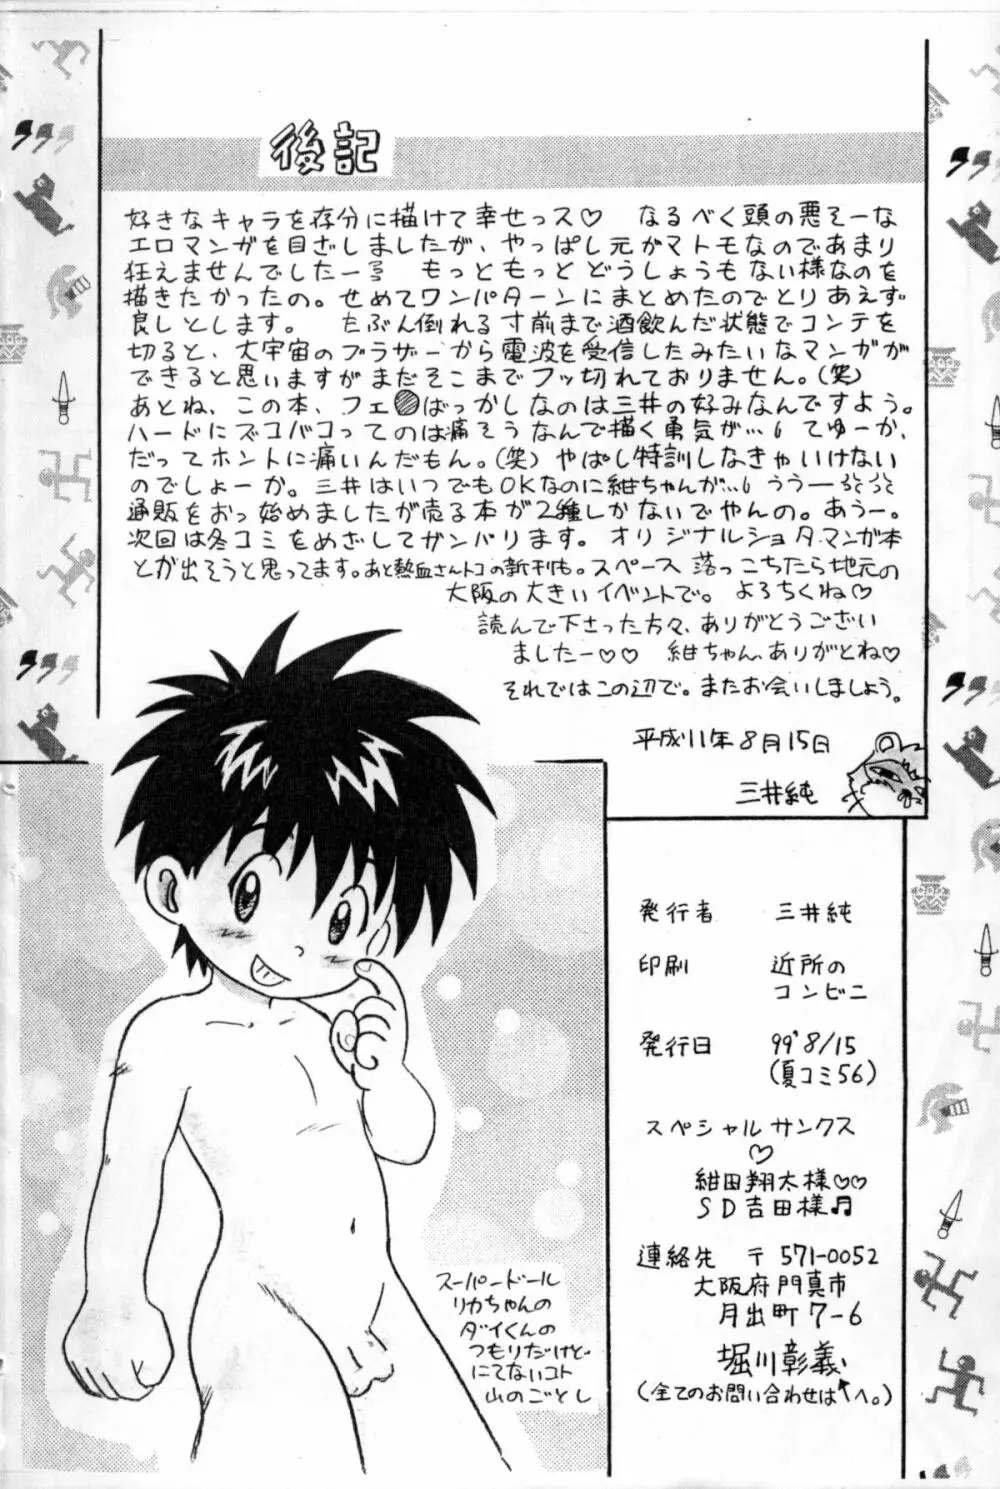 Mitsui Jun – Dreamer’s Only – Anime Shota Character Mix 25ページ